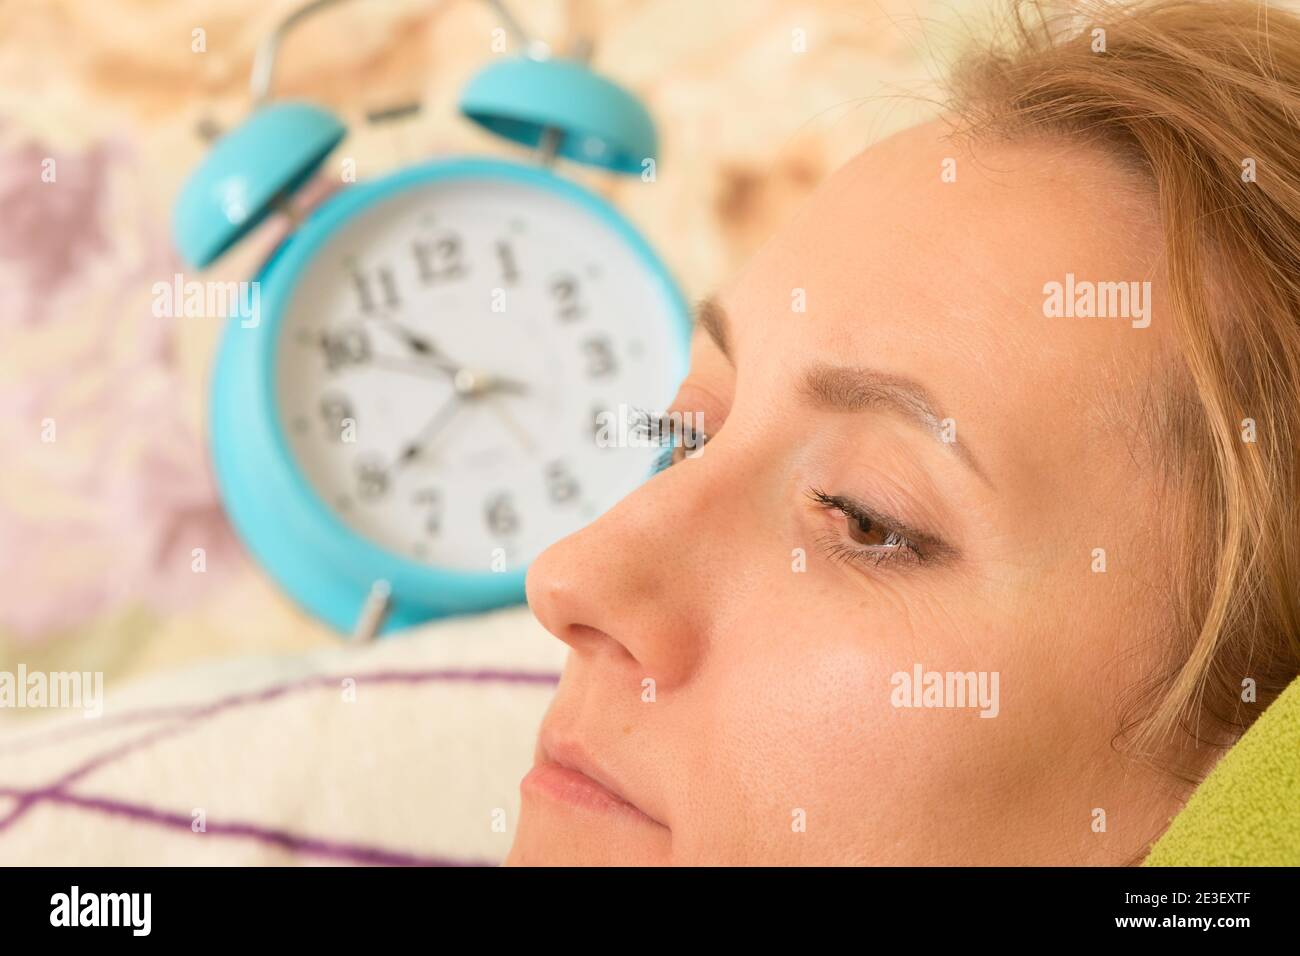 Female portrait with alarm clock. Stock Photo